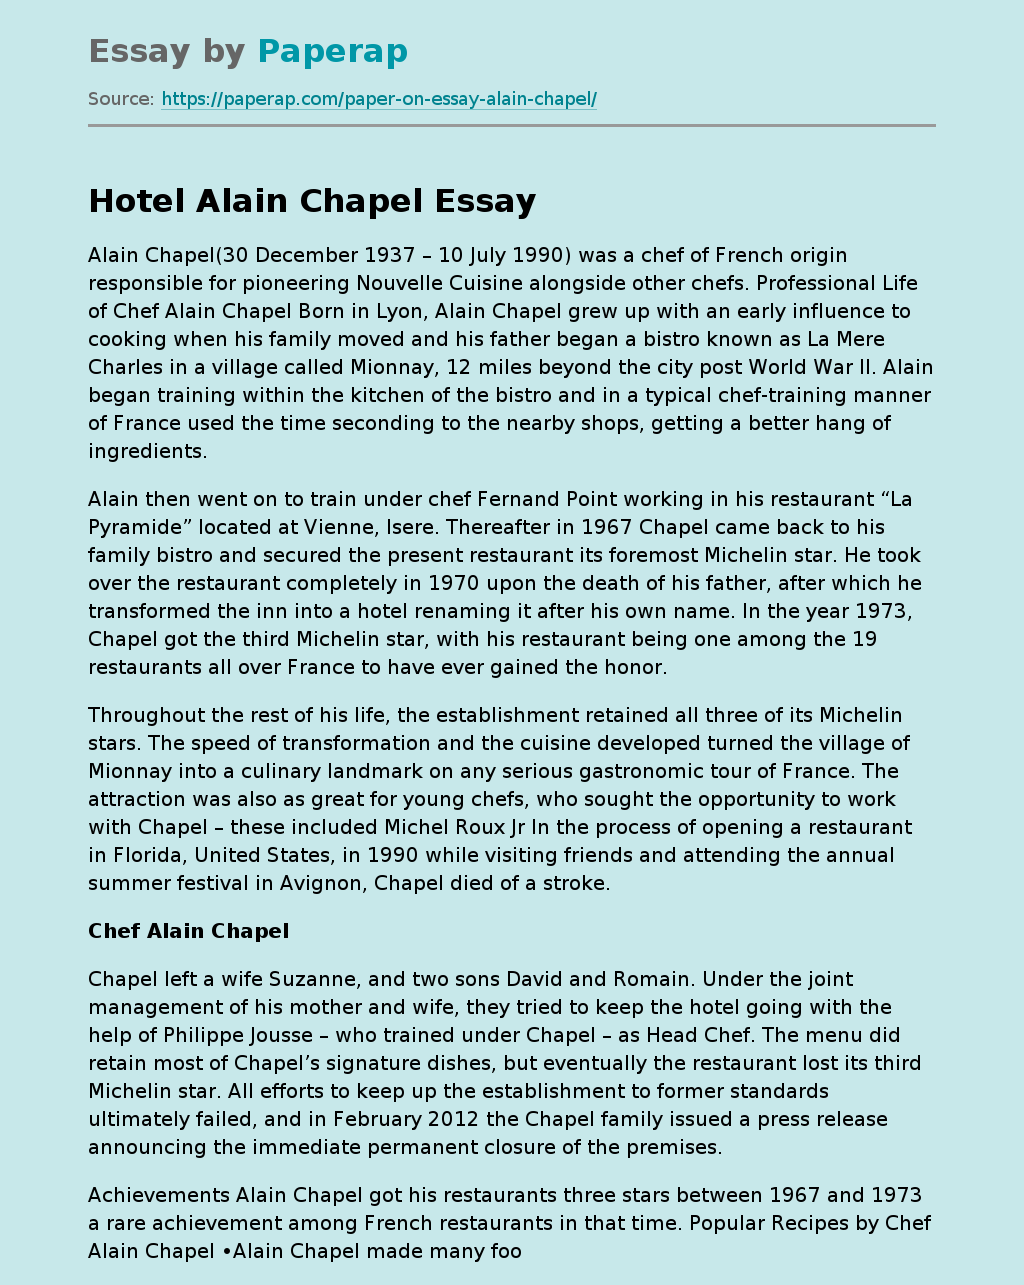 Hotel Alain Chapel